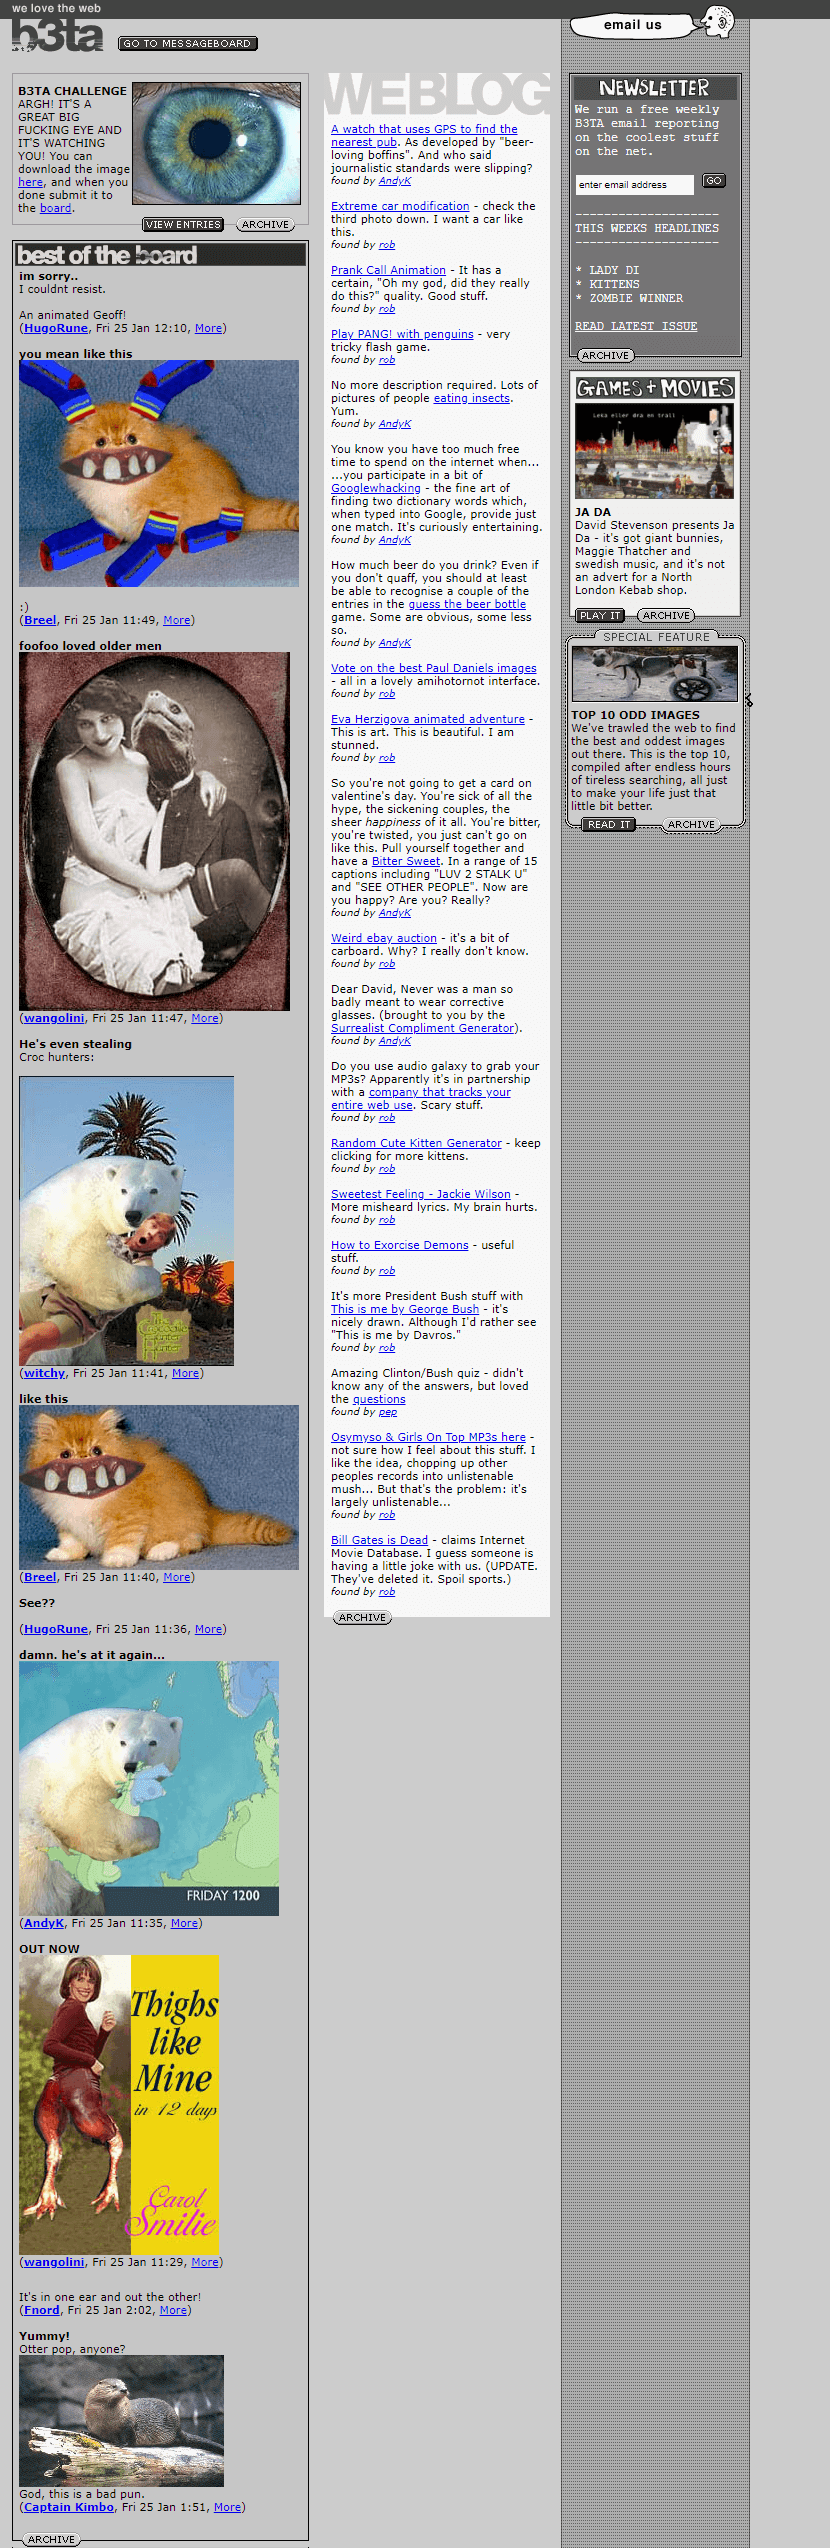 B3TA website in 2002